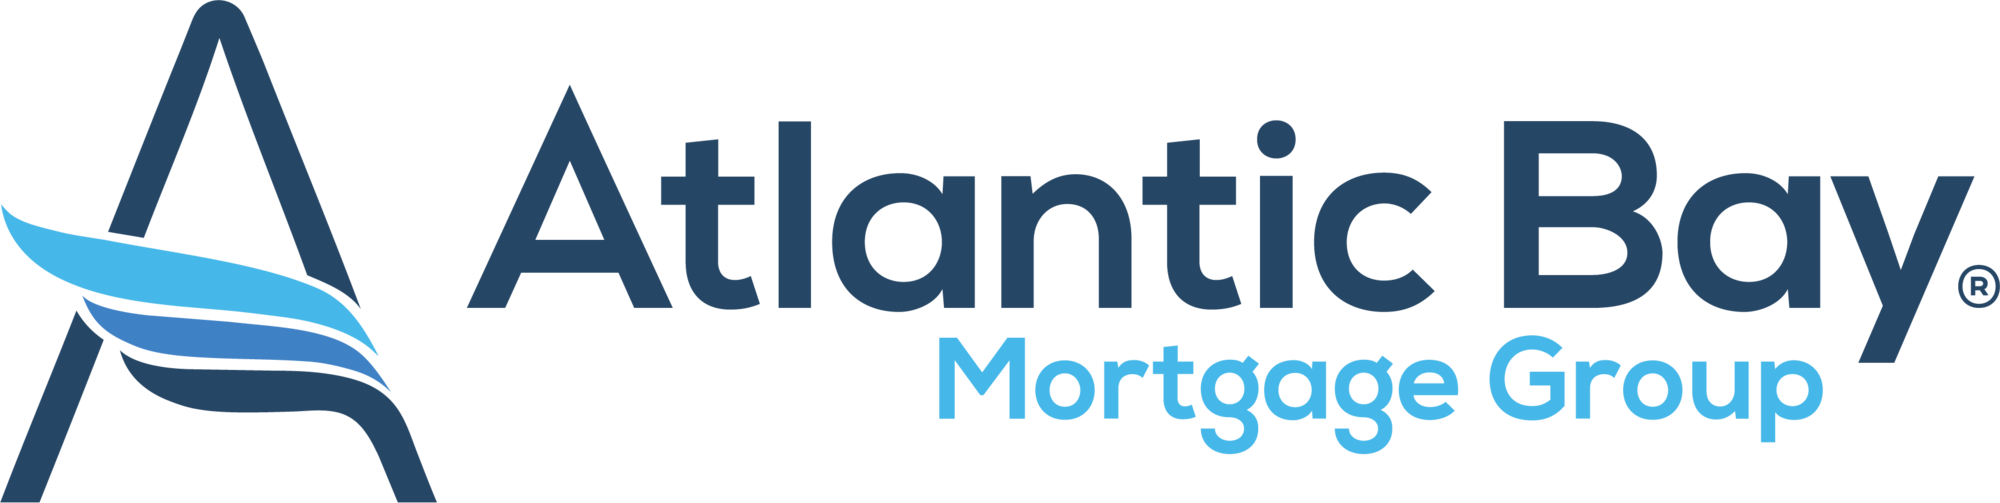 Atlantic Bay Mortgage Group Logo